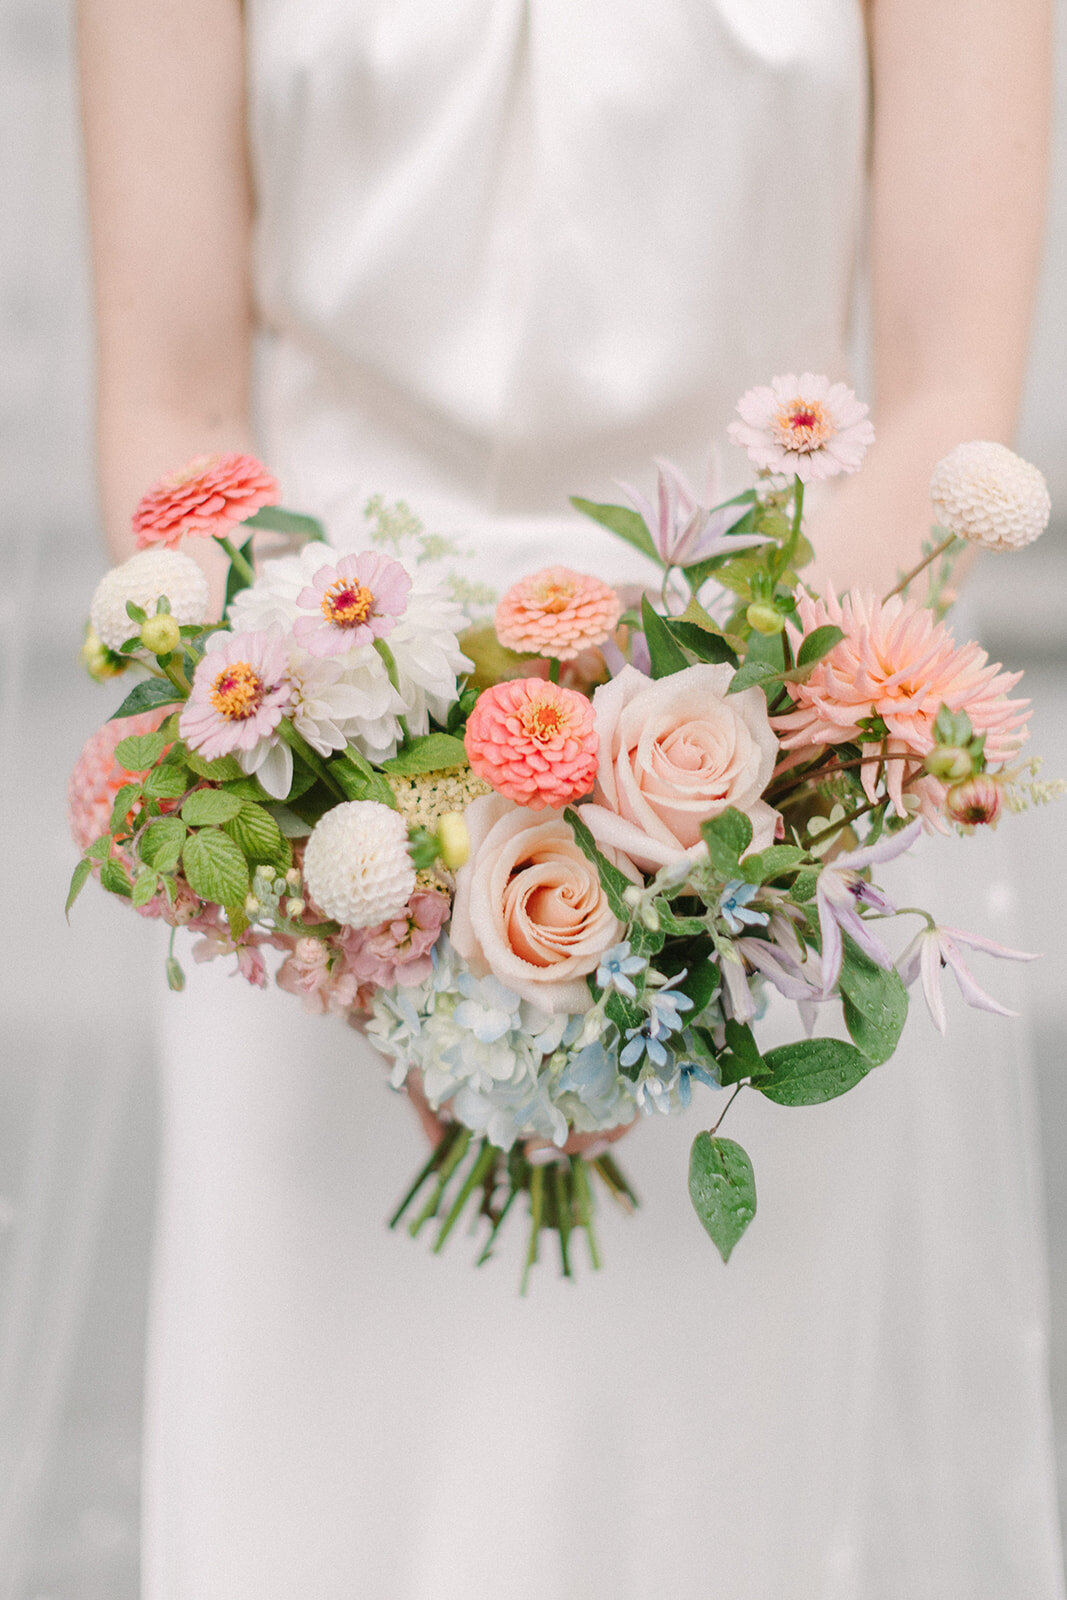 Atelier-Carmel-Wedding-Florist-GALLERY-Bridal-28